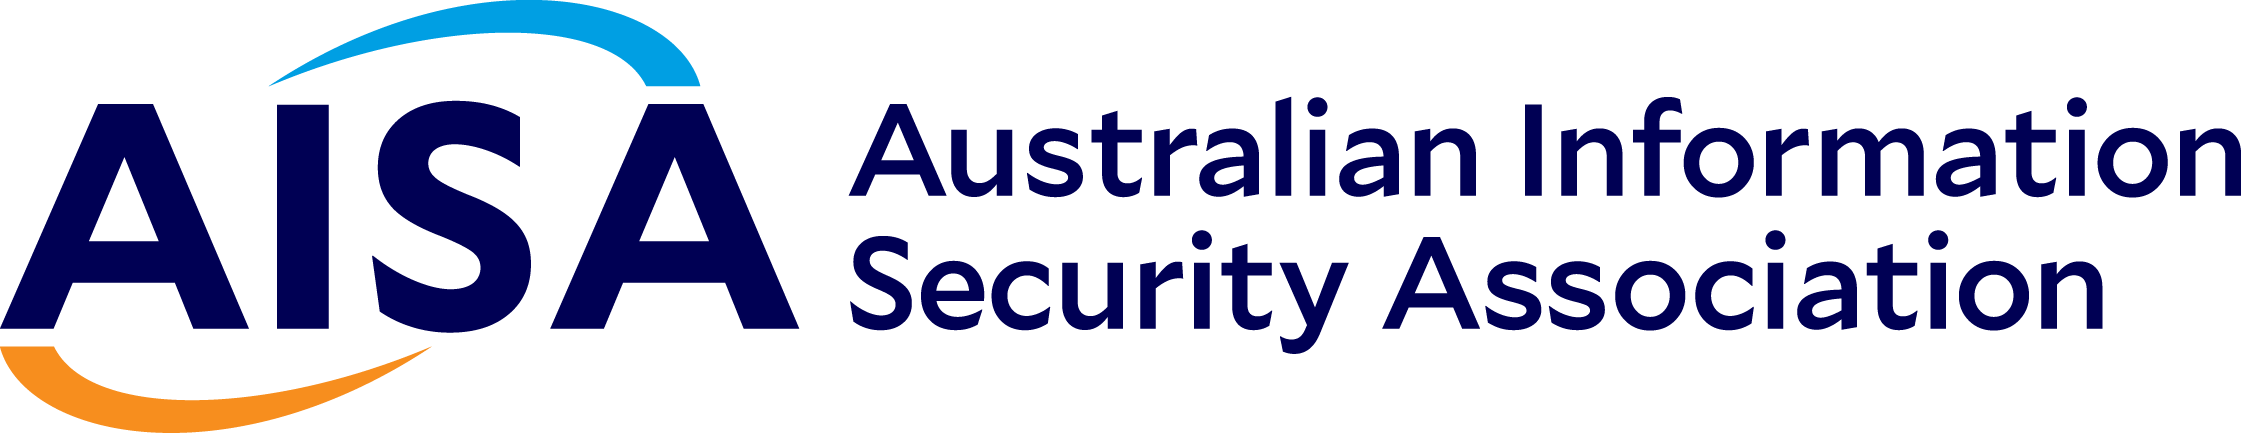 AISA 澳大利亚信息安全协会徽标